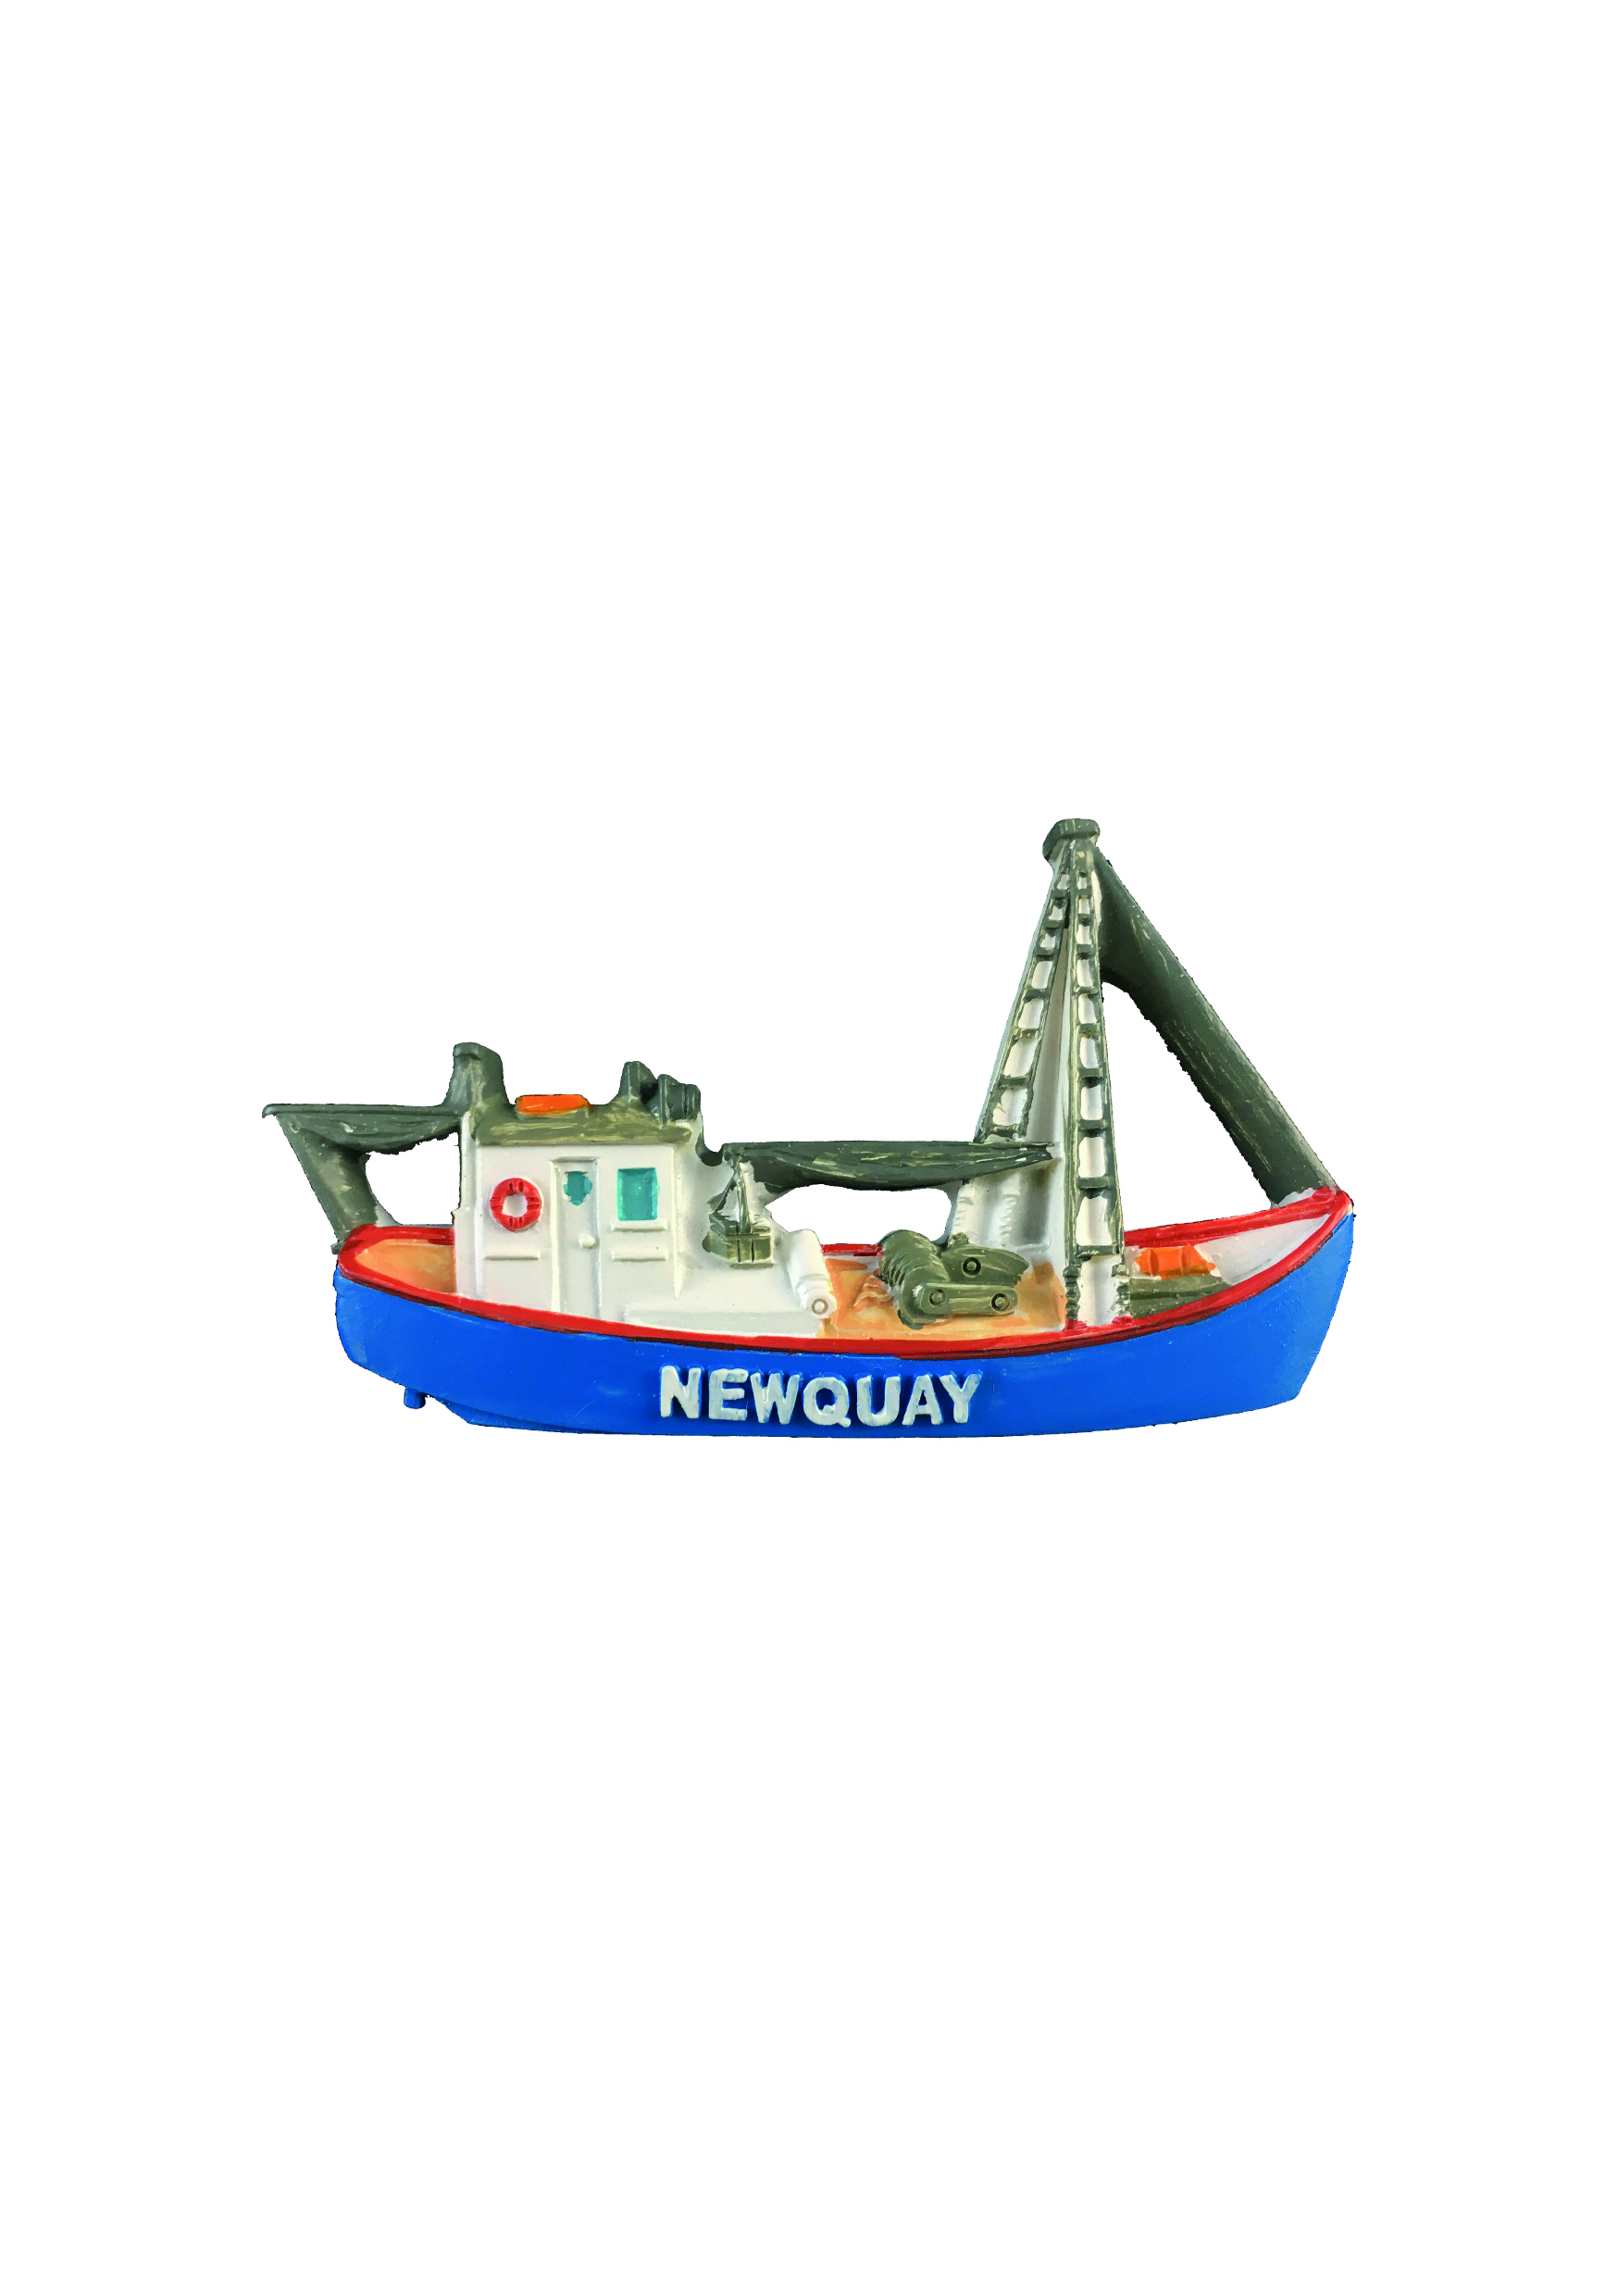 Resin Magnet Newquay Trawler